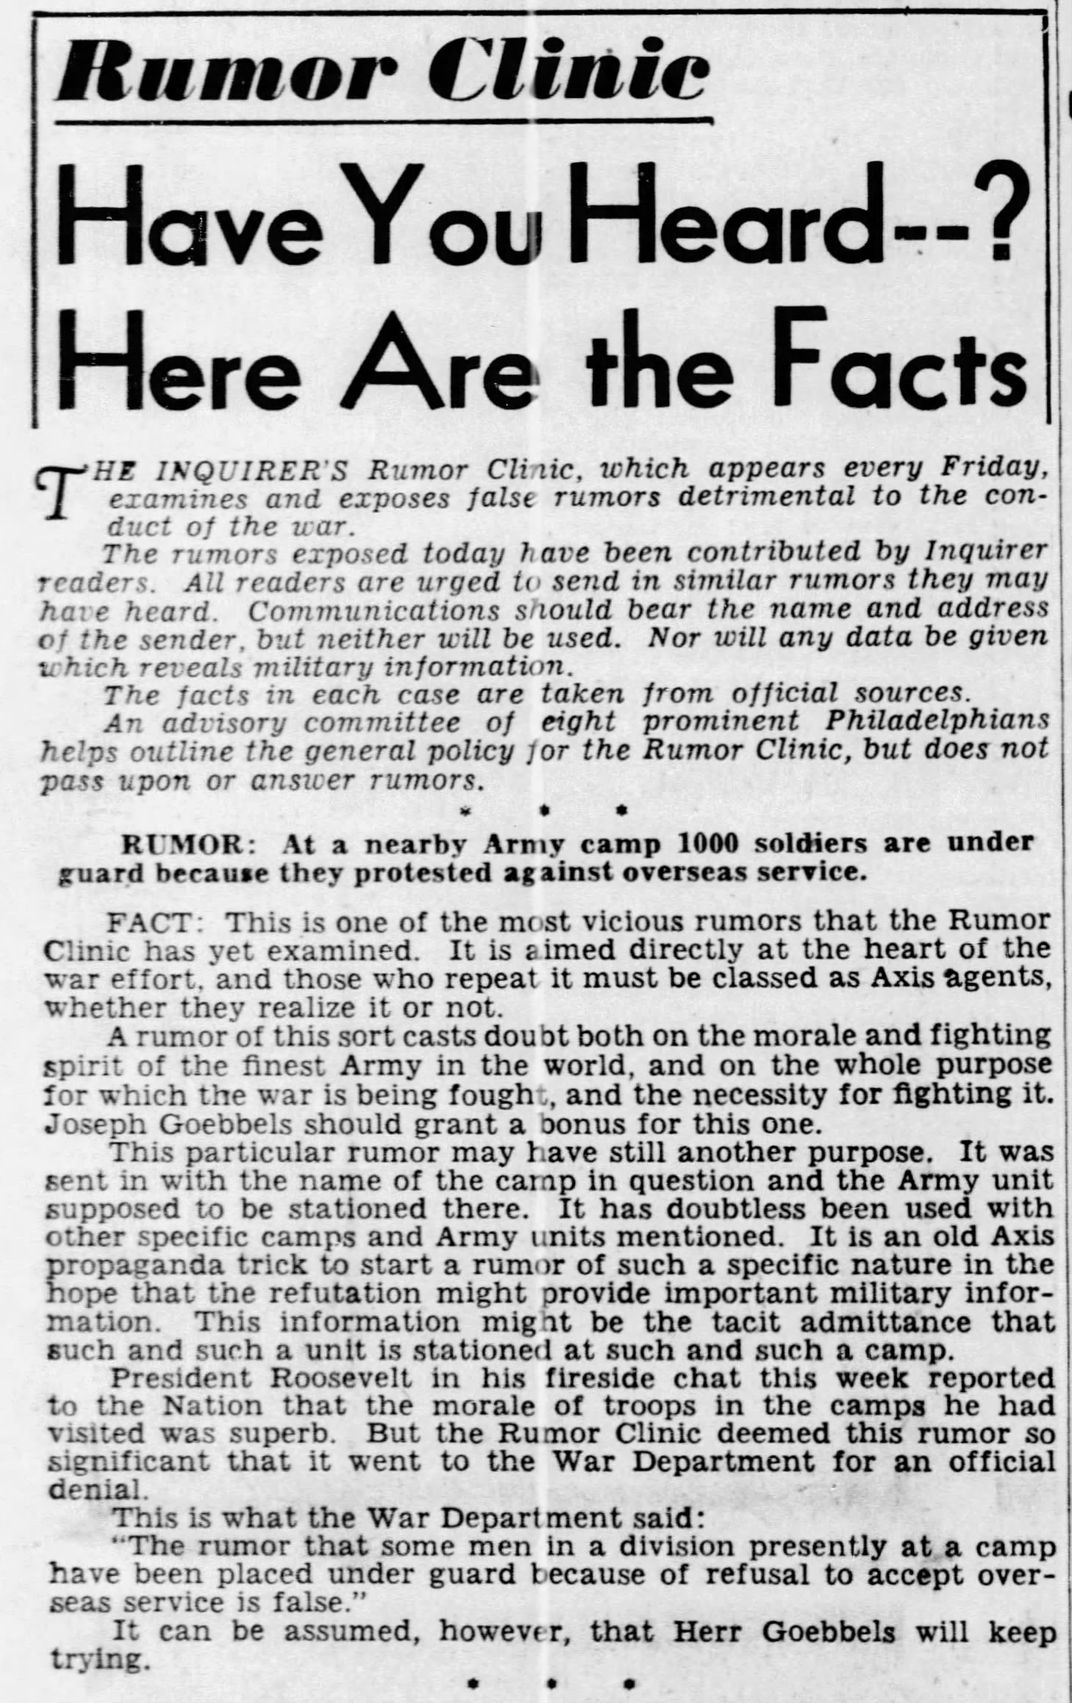 An October 1942 edition of the <em>Philadelphia Inquirer</em>'s Rumor Clinic column